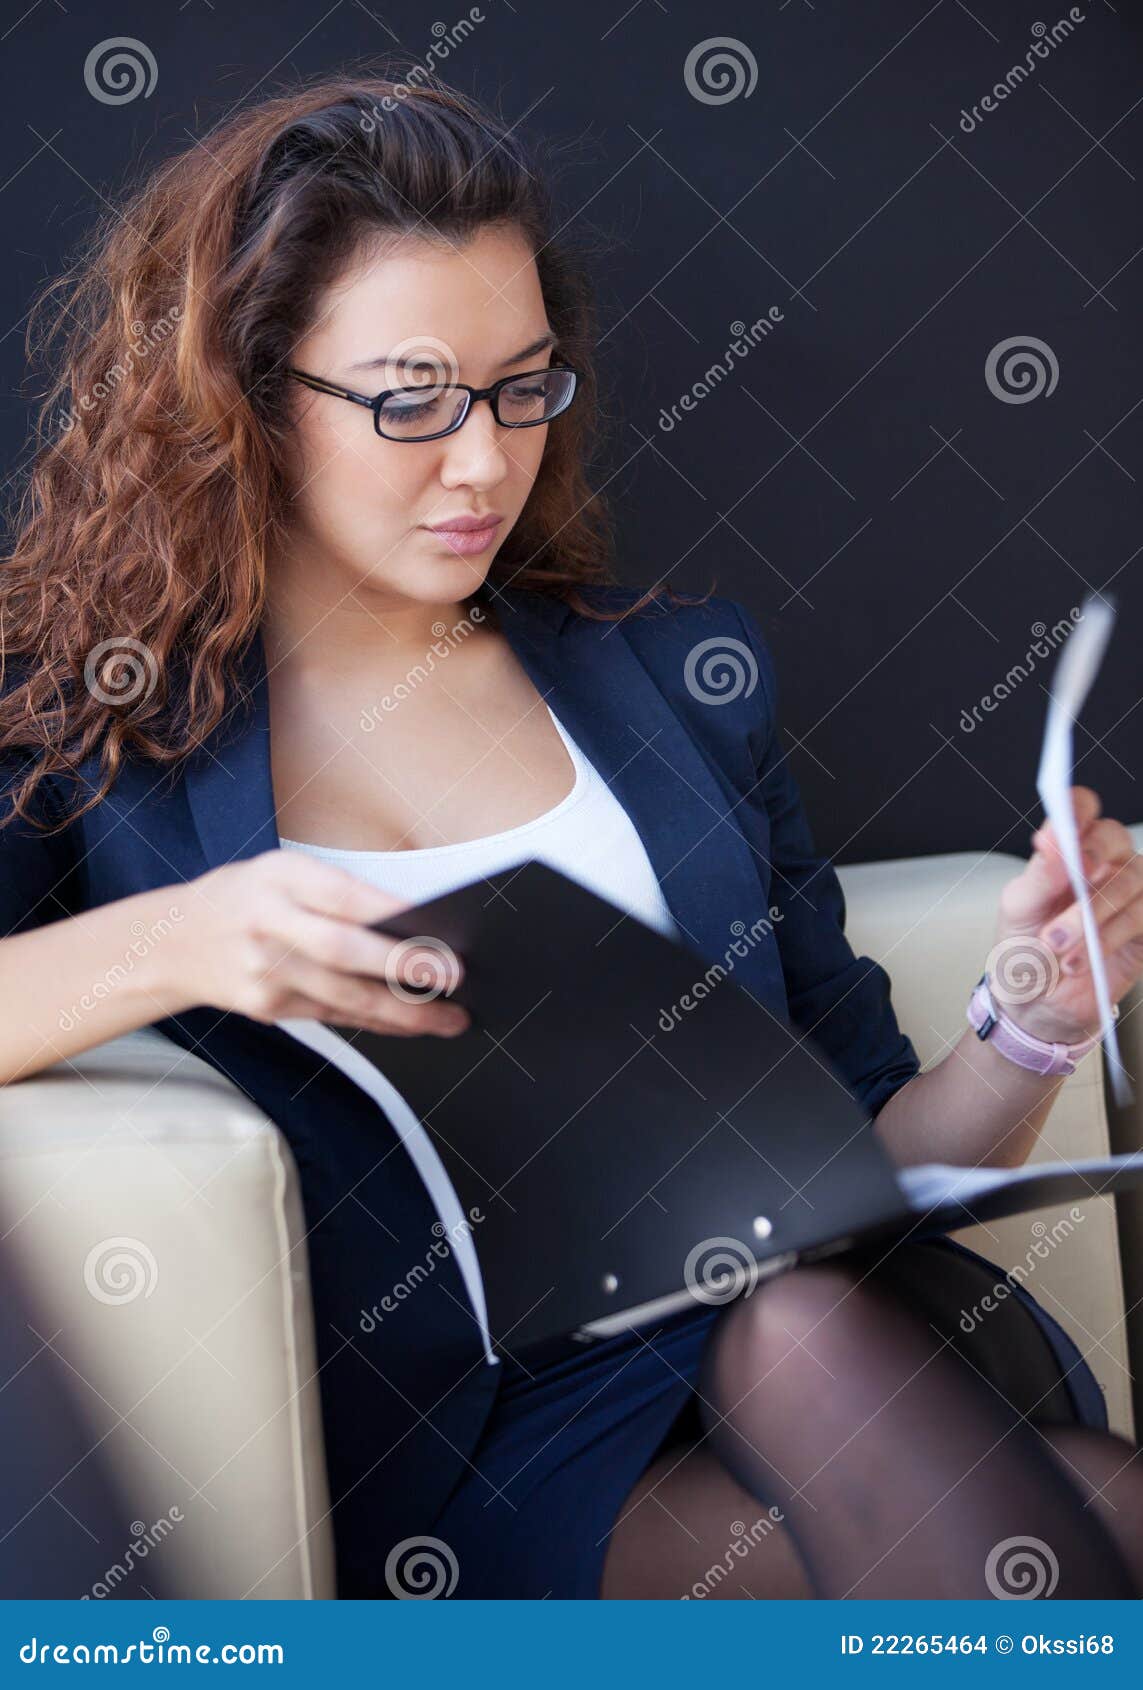 woman read documents